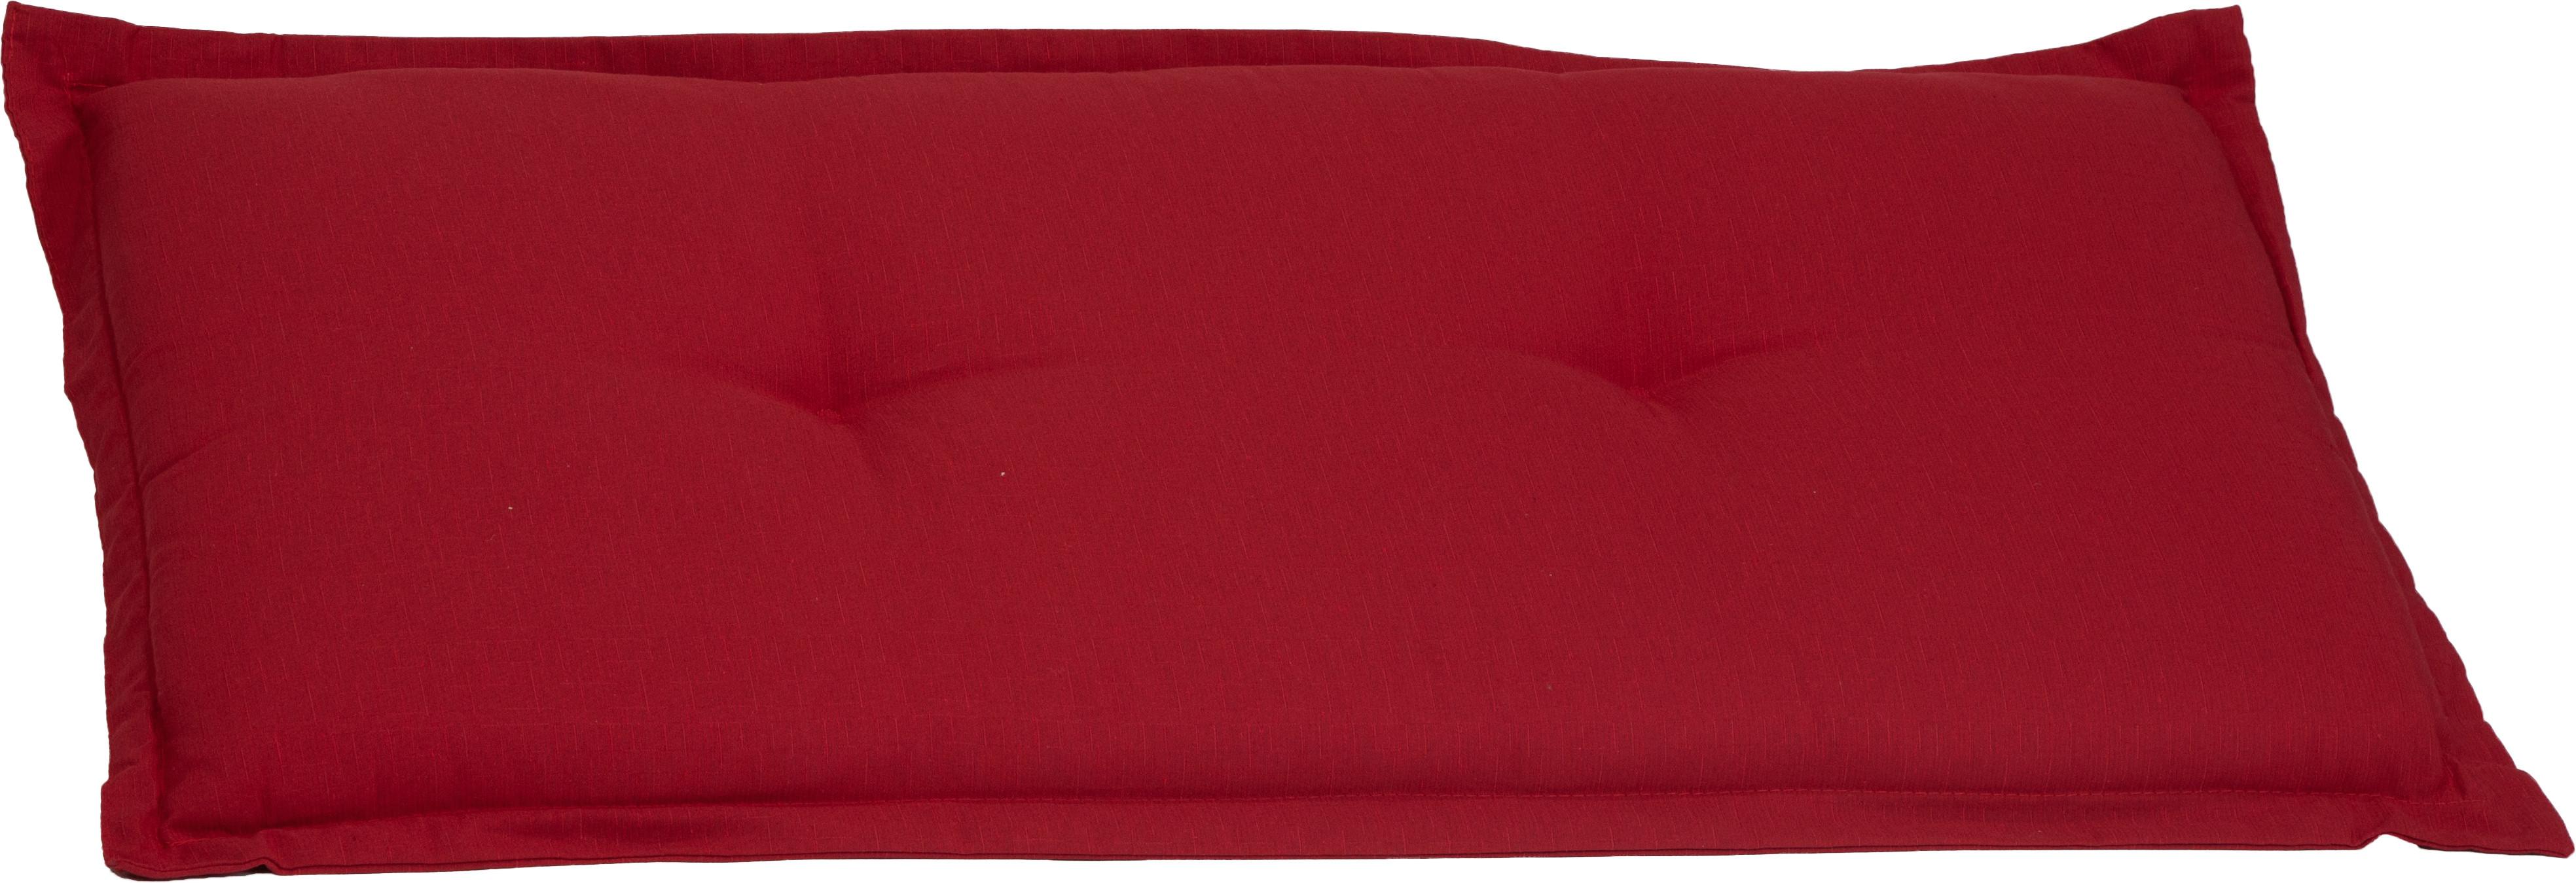 Bankauflage P213 Ascot Bankauflage - Rot, Basics, Textil (100/45/7cm)